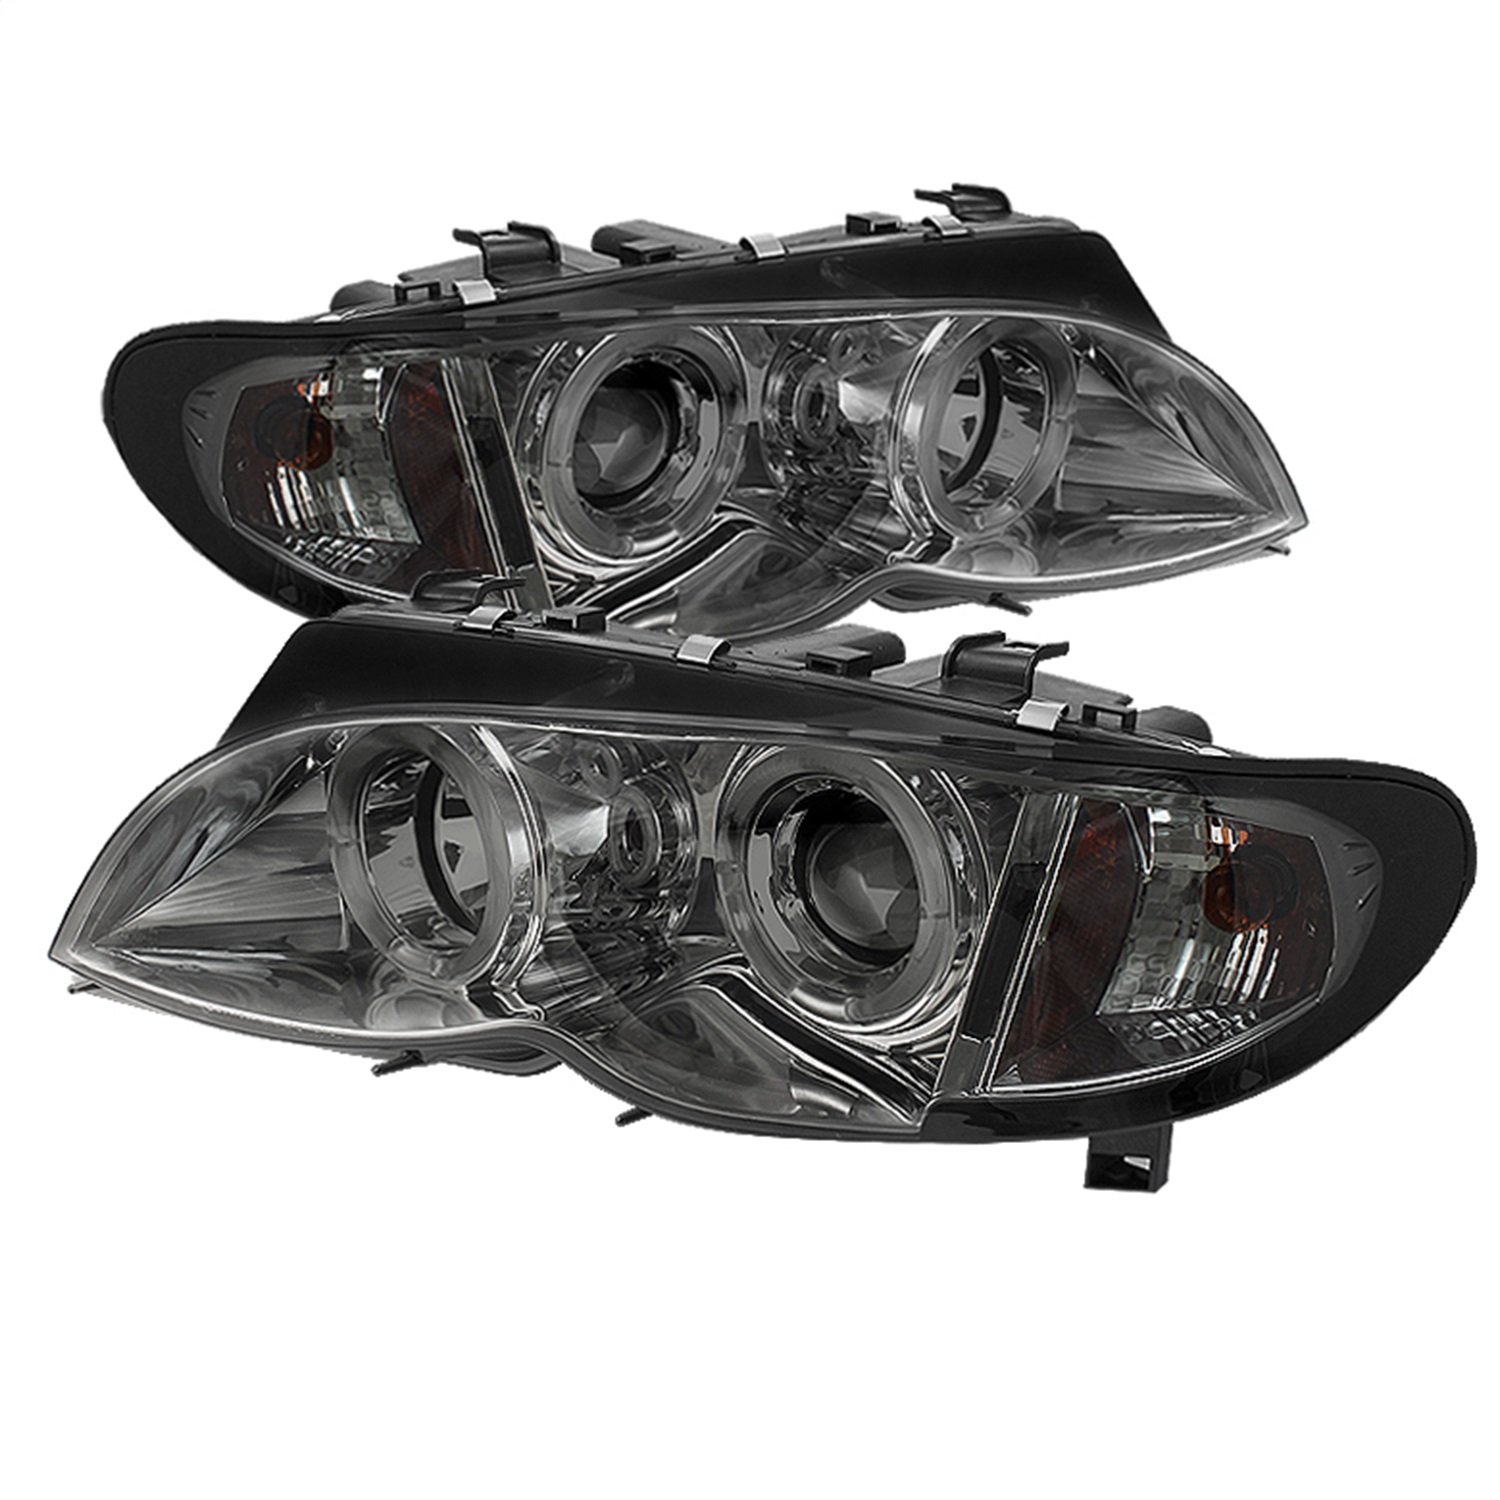 Spyder Auto 5042422 Halo Projector Headlights Fits 320i 325i 325xi 330i 330xi